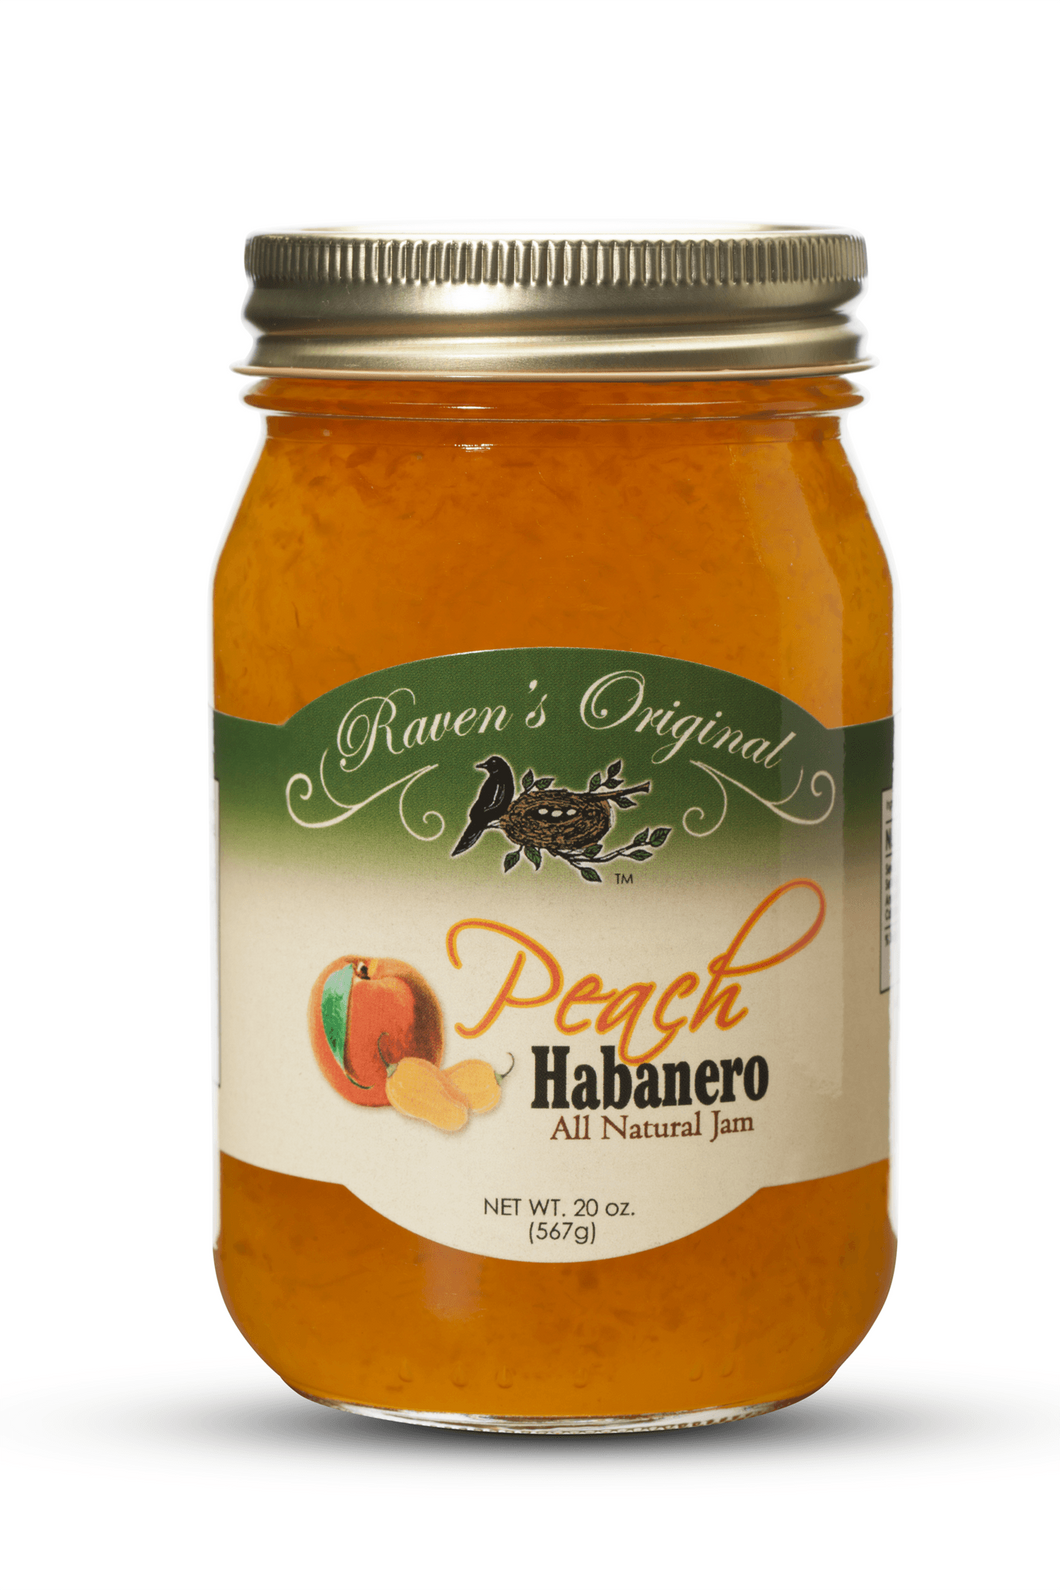 Peach Habanero Jam